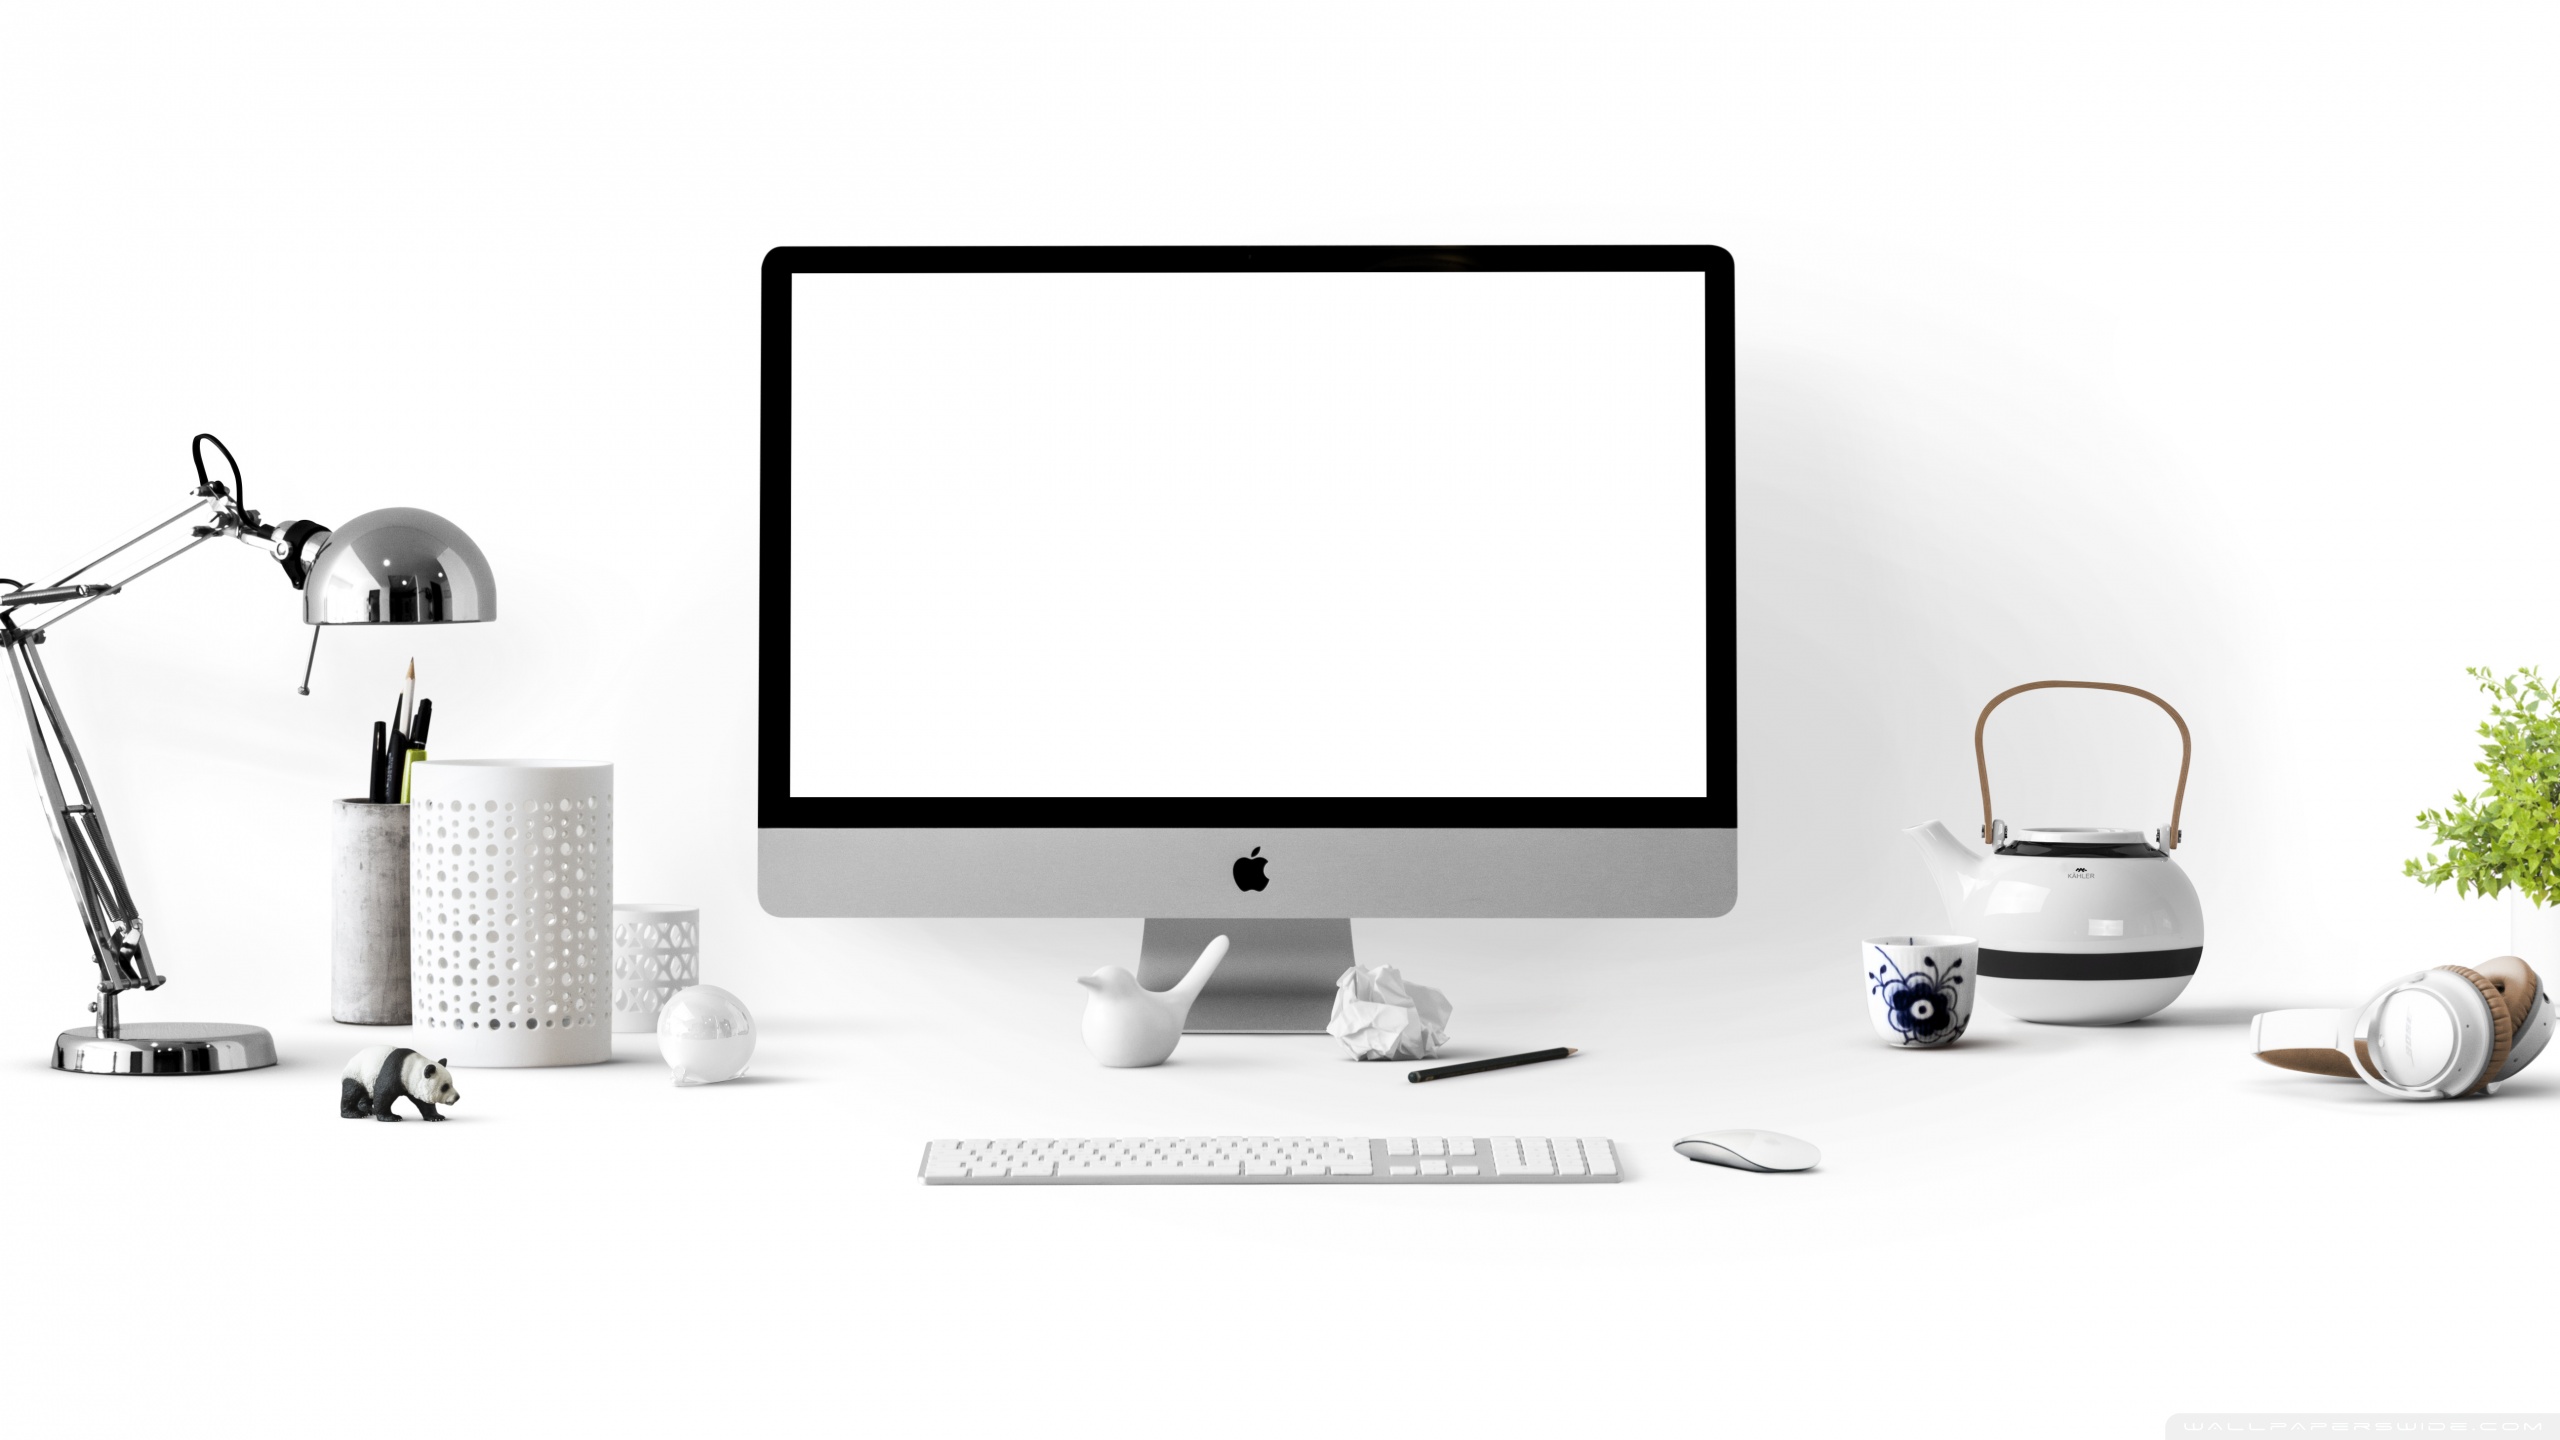 Office Desk Decor Ultra HD Desktop Background Wallpaper for 4K UHD TV :  Widescreen & UltraWide Desktop & Laptop : Multi Display, Dual Monitor :  Tablet : Smartphone